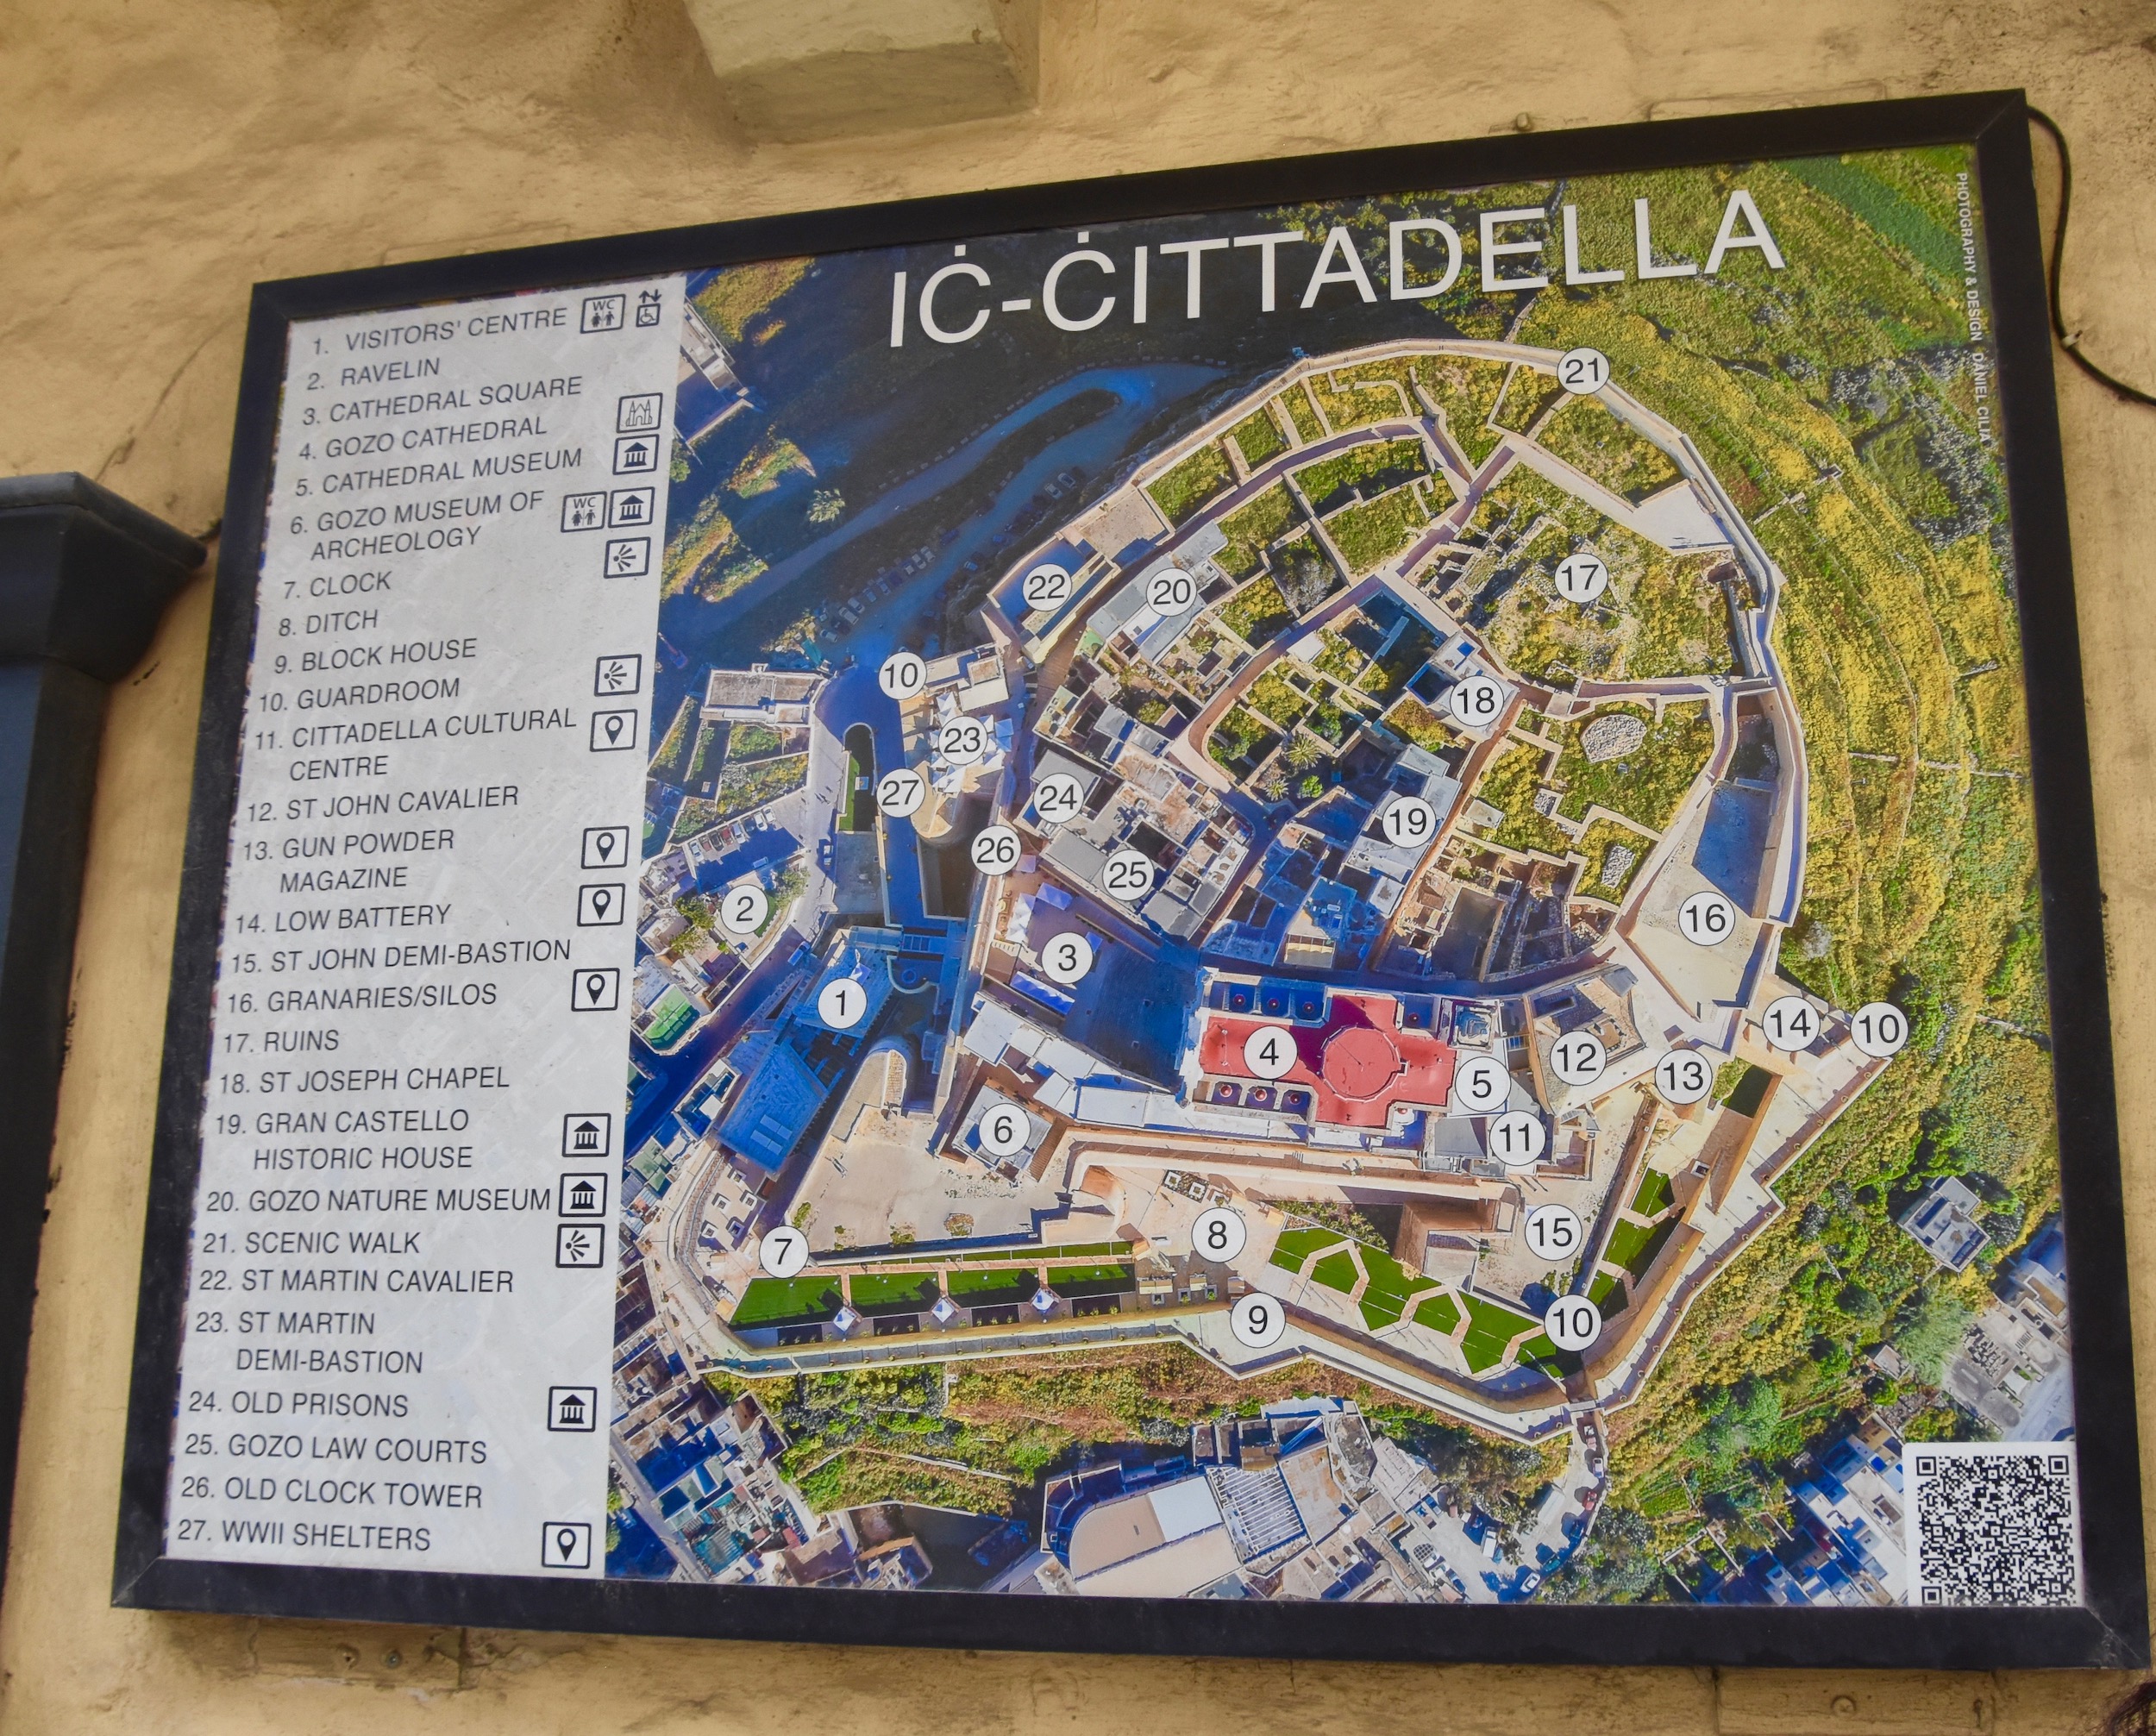 Map of the Cittadella Gozo